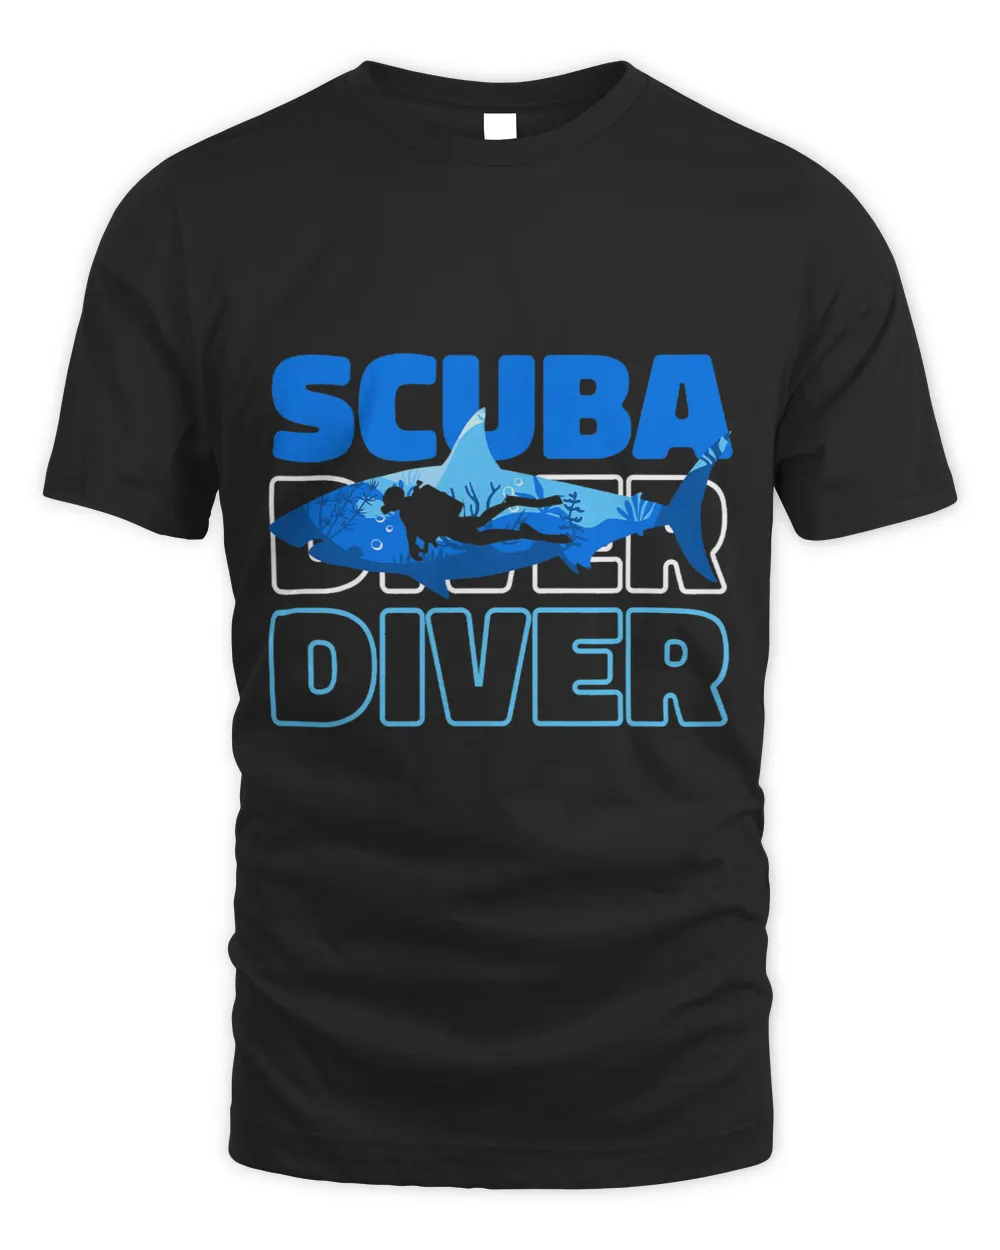 Scuba Diver with a Shark for Scuba Diving